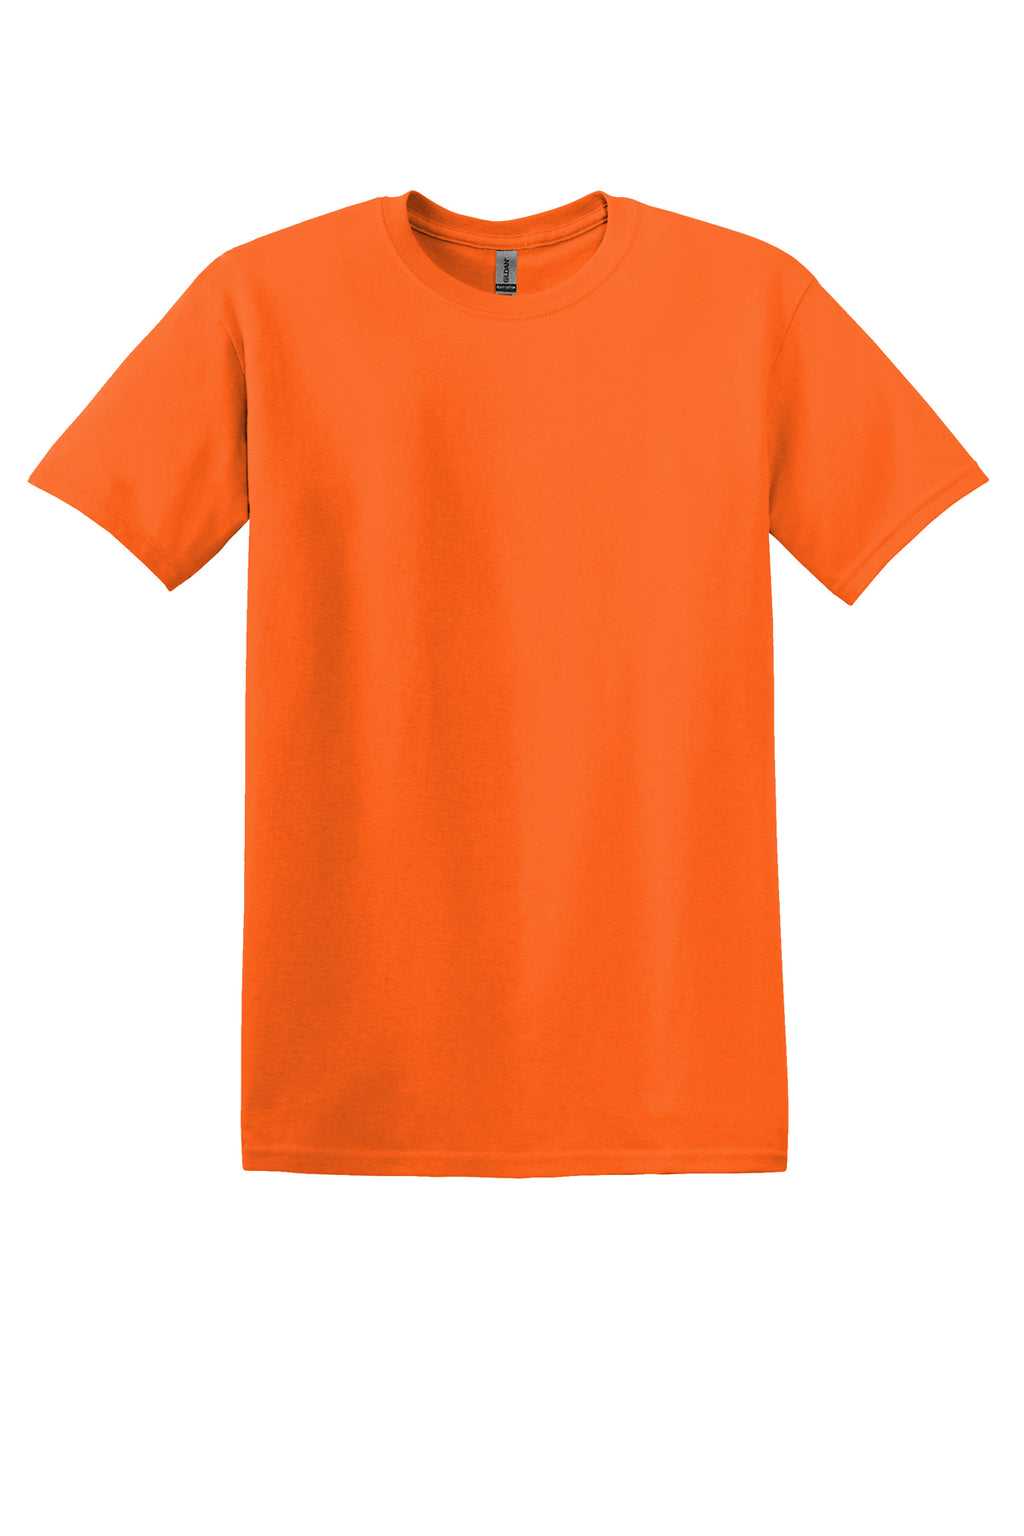 Gildan Mens/Unisex S/S Shirts Safety Orange